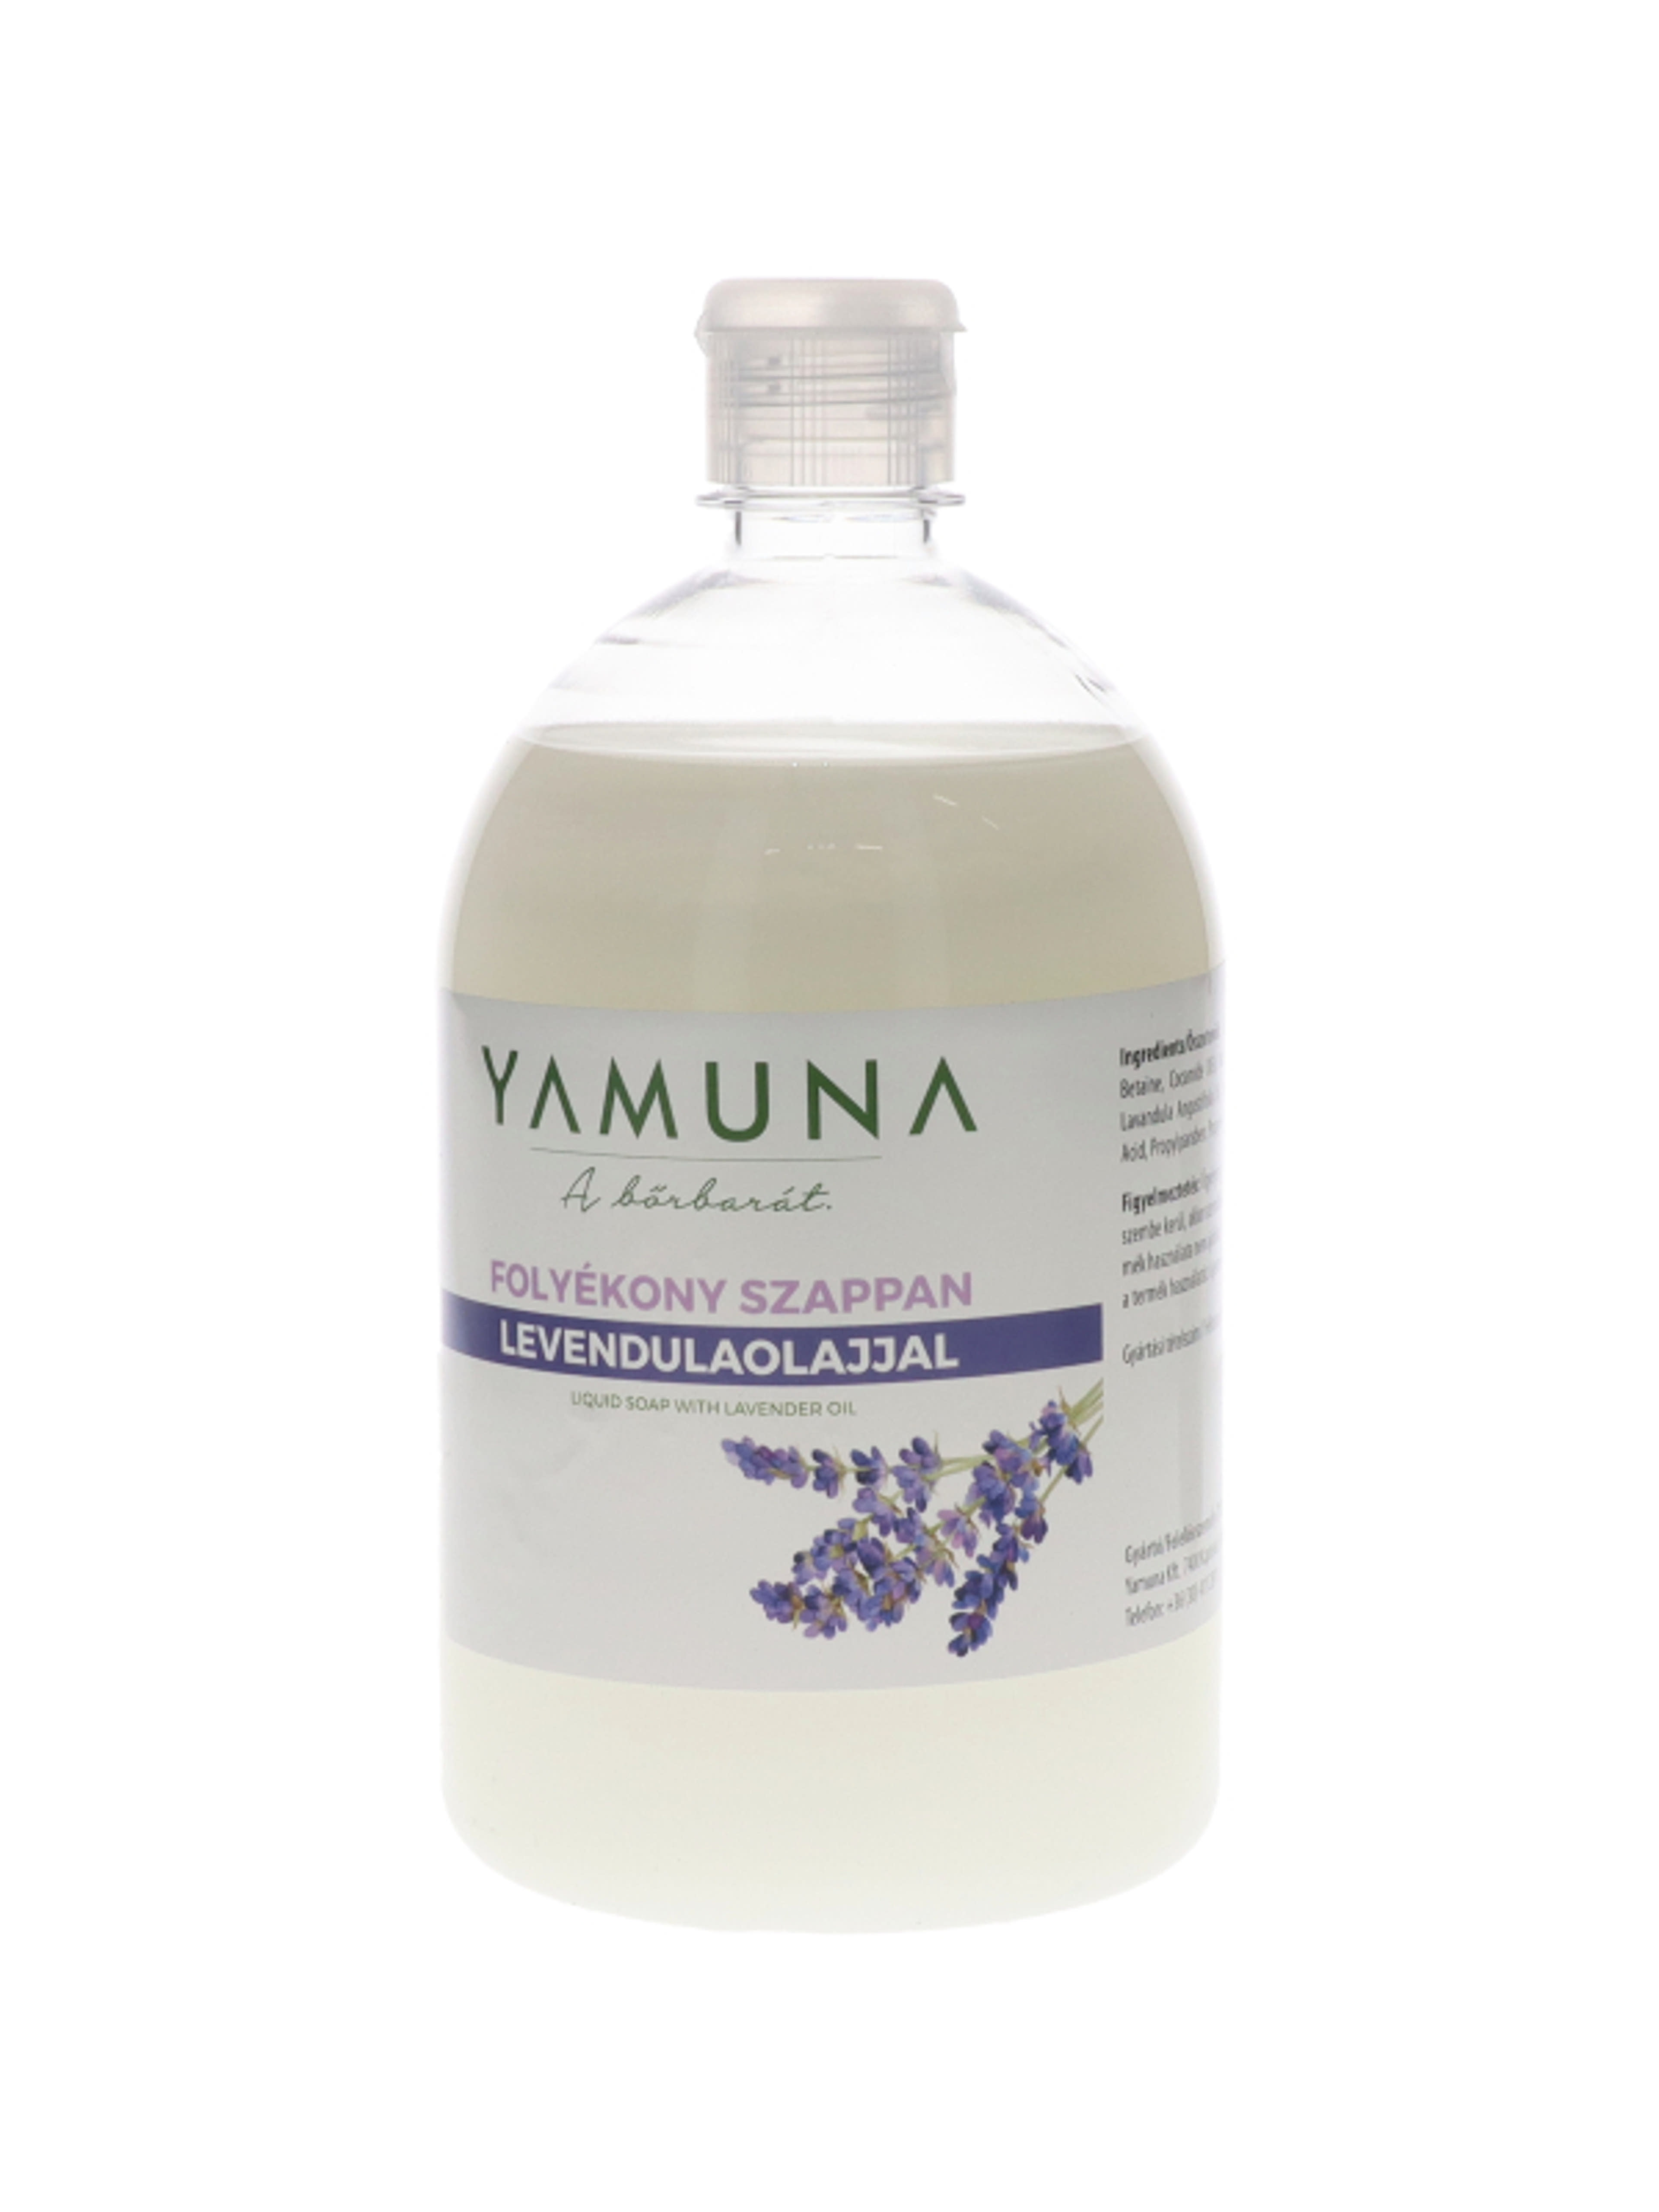 Yamuna folyékony szappan levendulaolajjal - 1000 ml